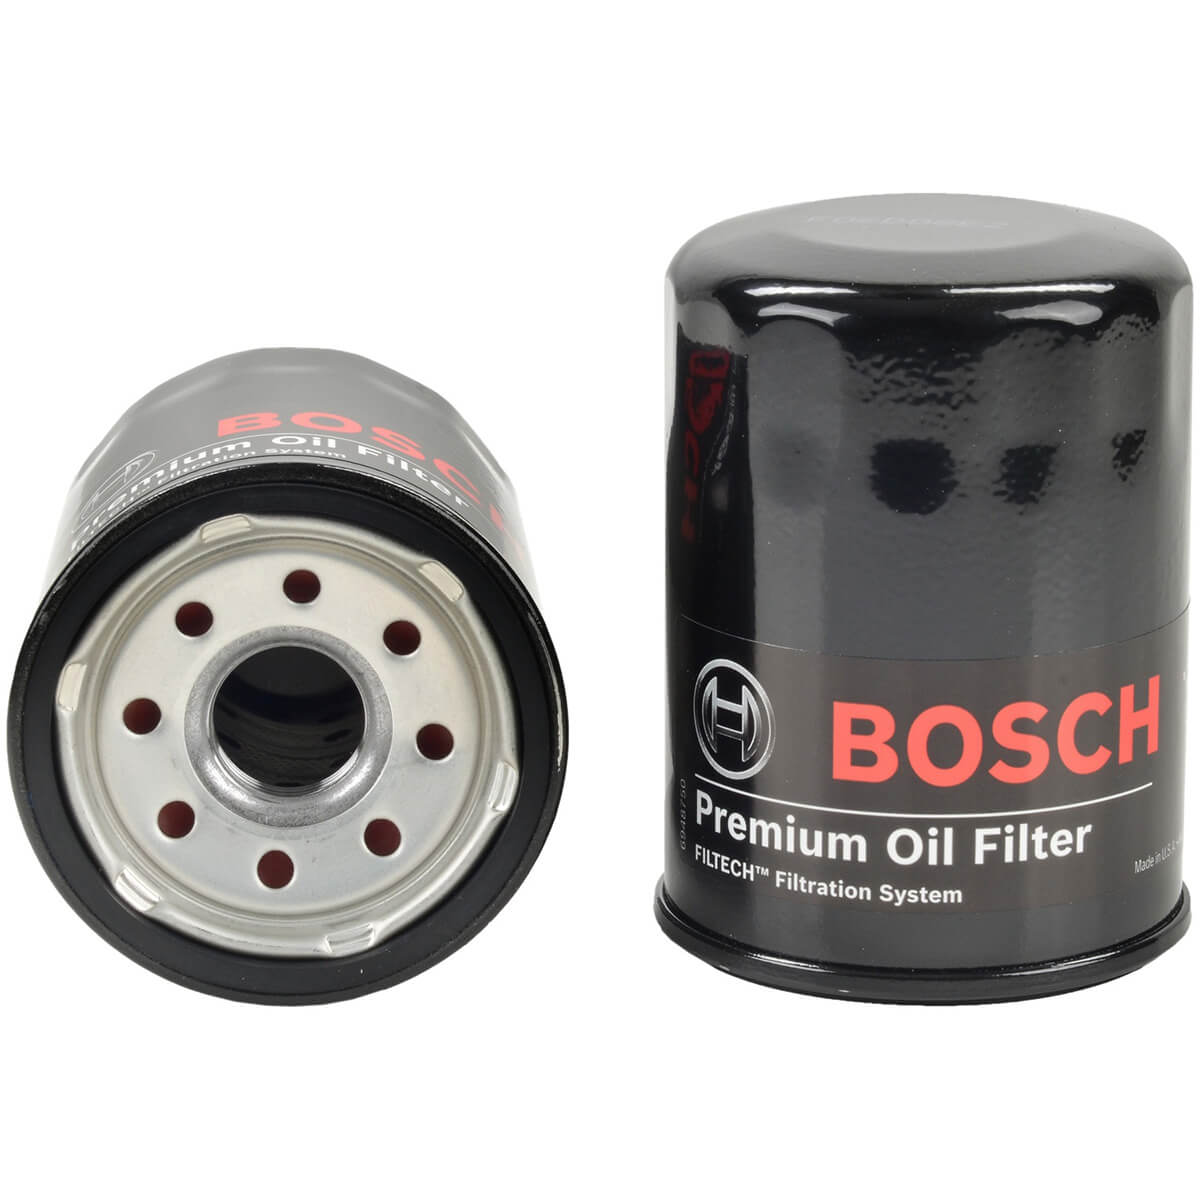 Bosch Premium Oil Filter 3323 Product Image